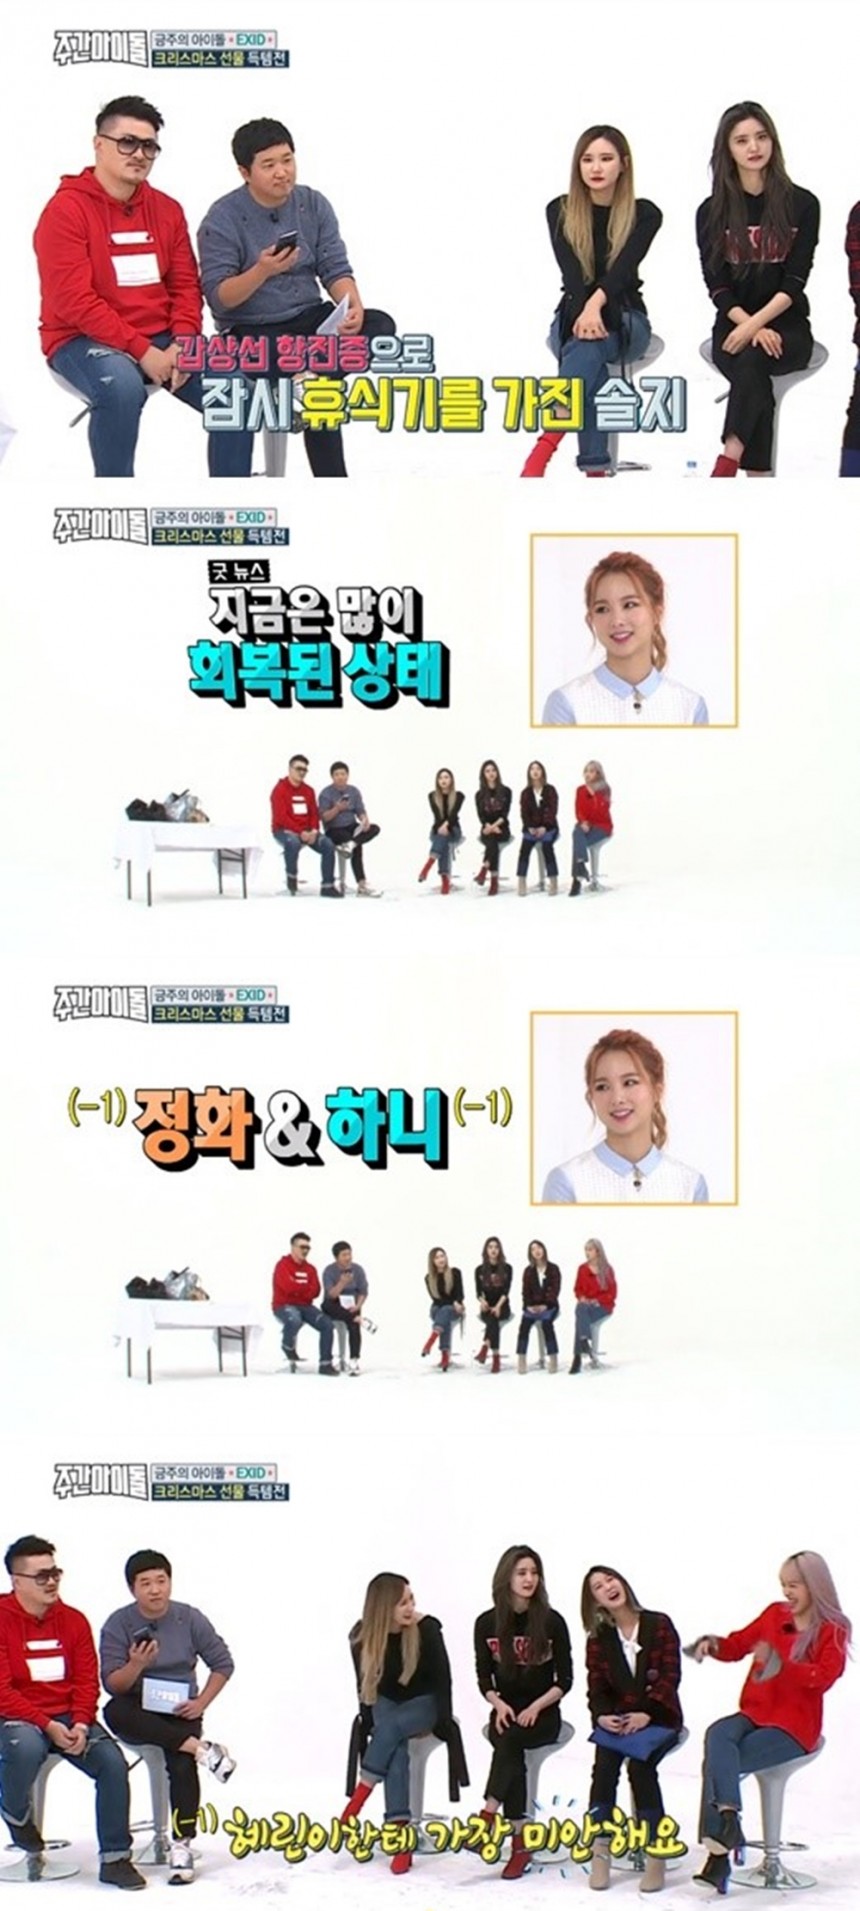 EXID / MBC 에브리원 ‘주간아이돌’ 방송 캡처